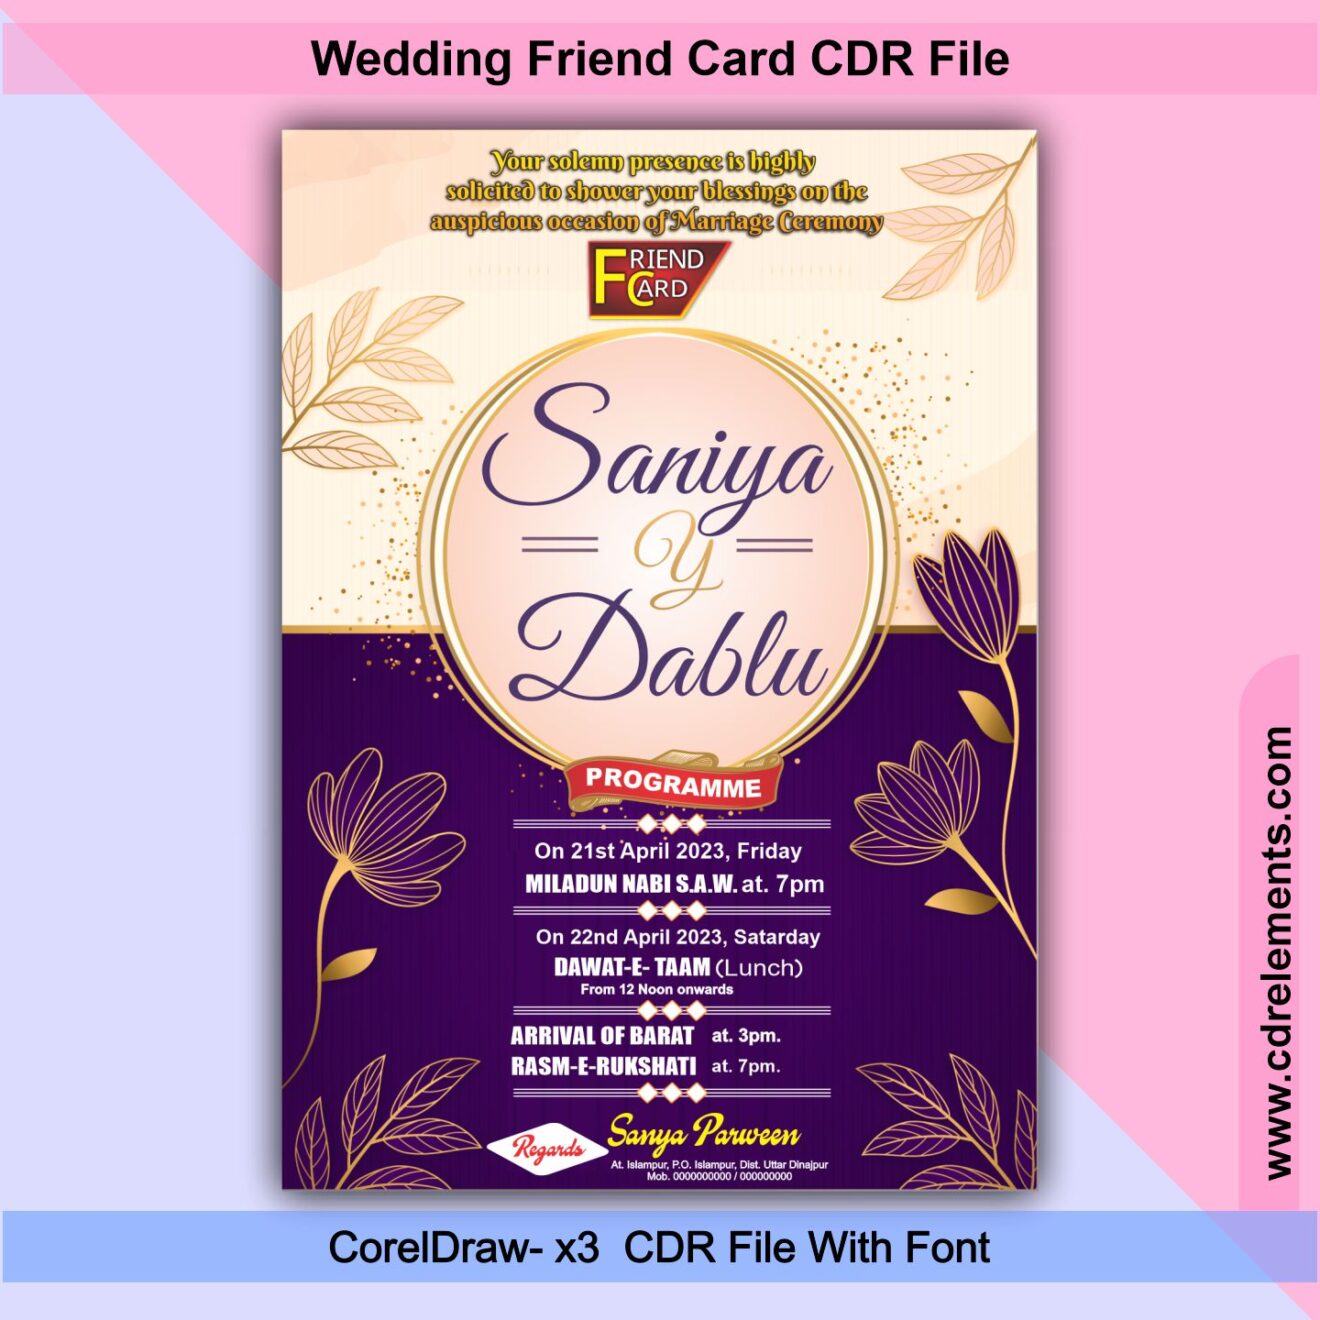 wedding-friend-card-cdr-file-cdrelements